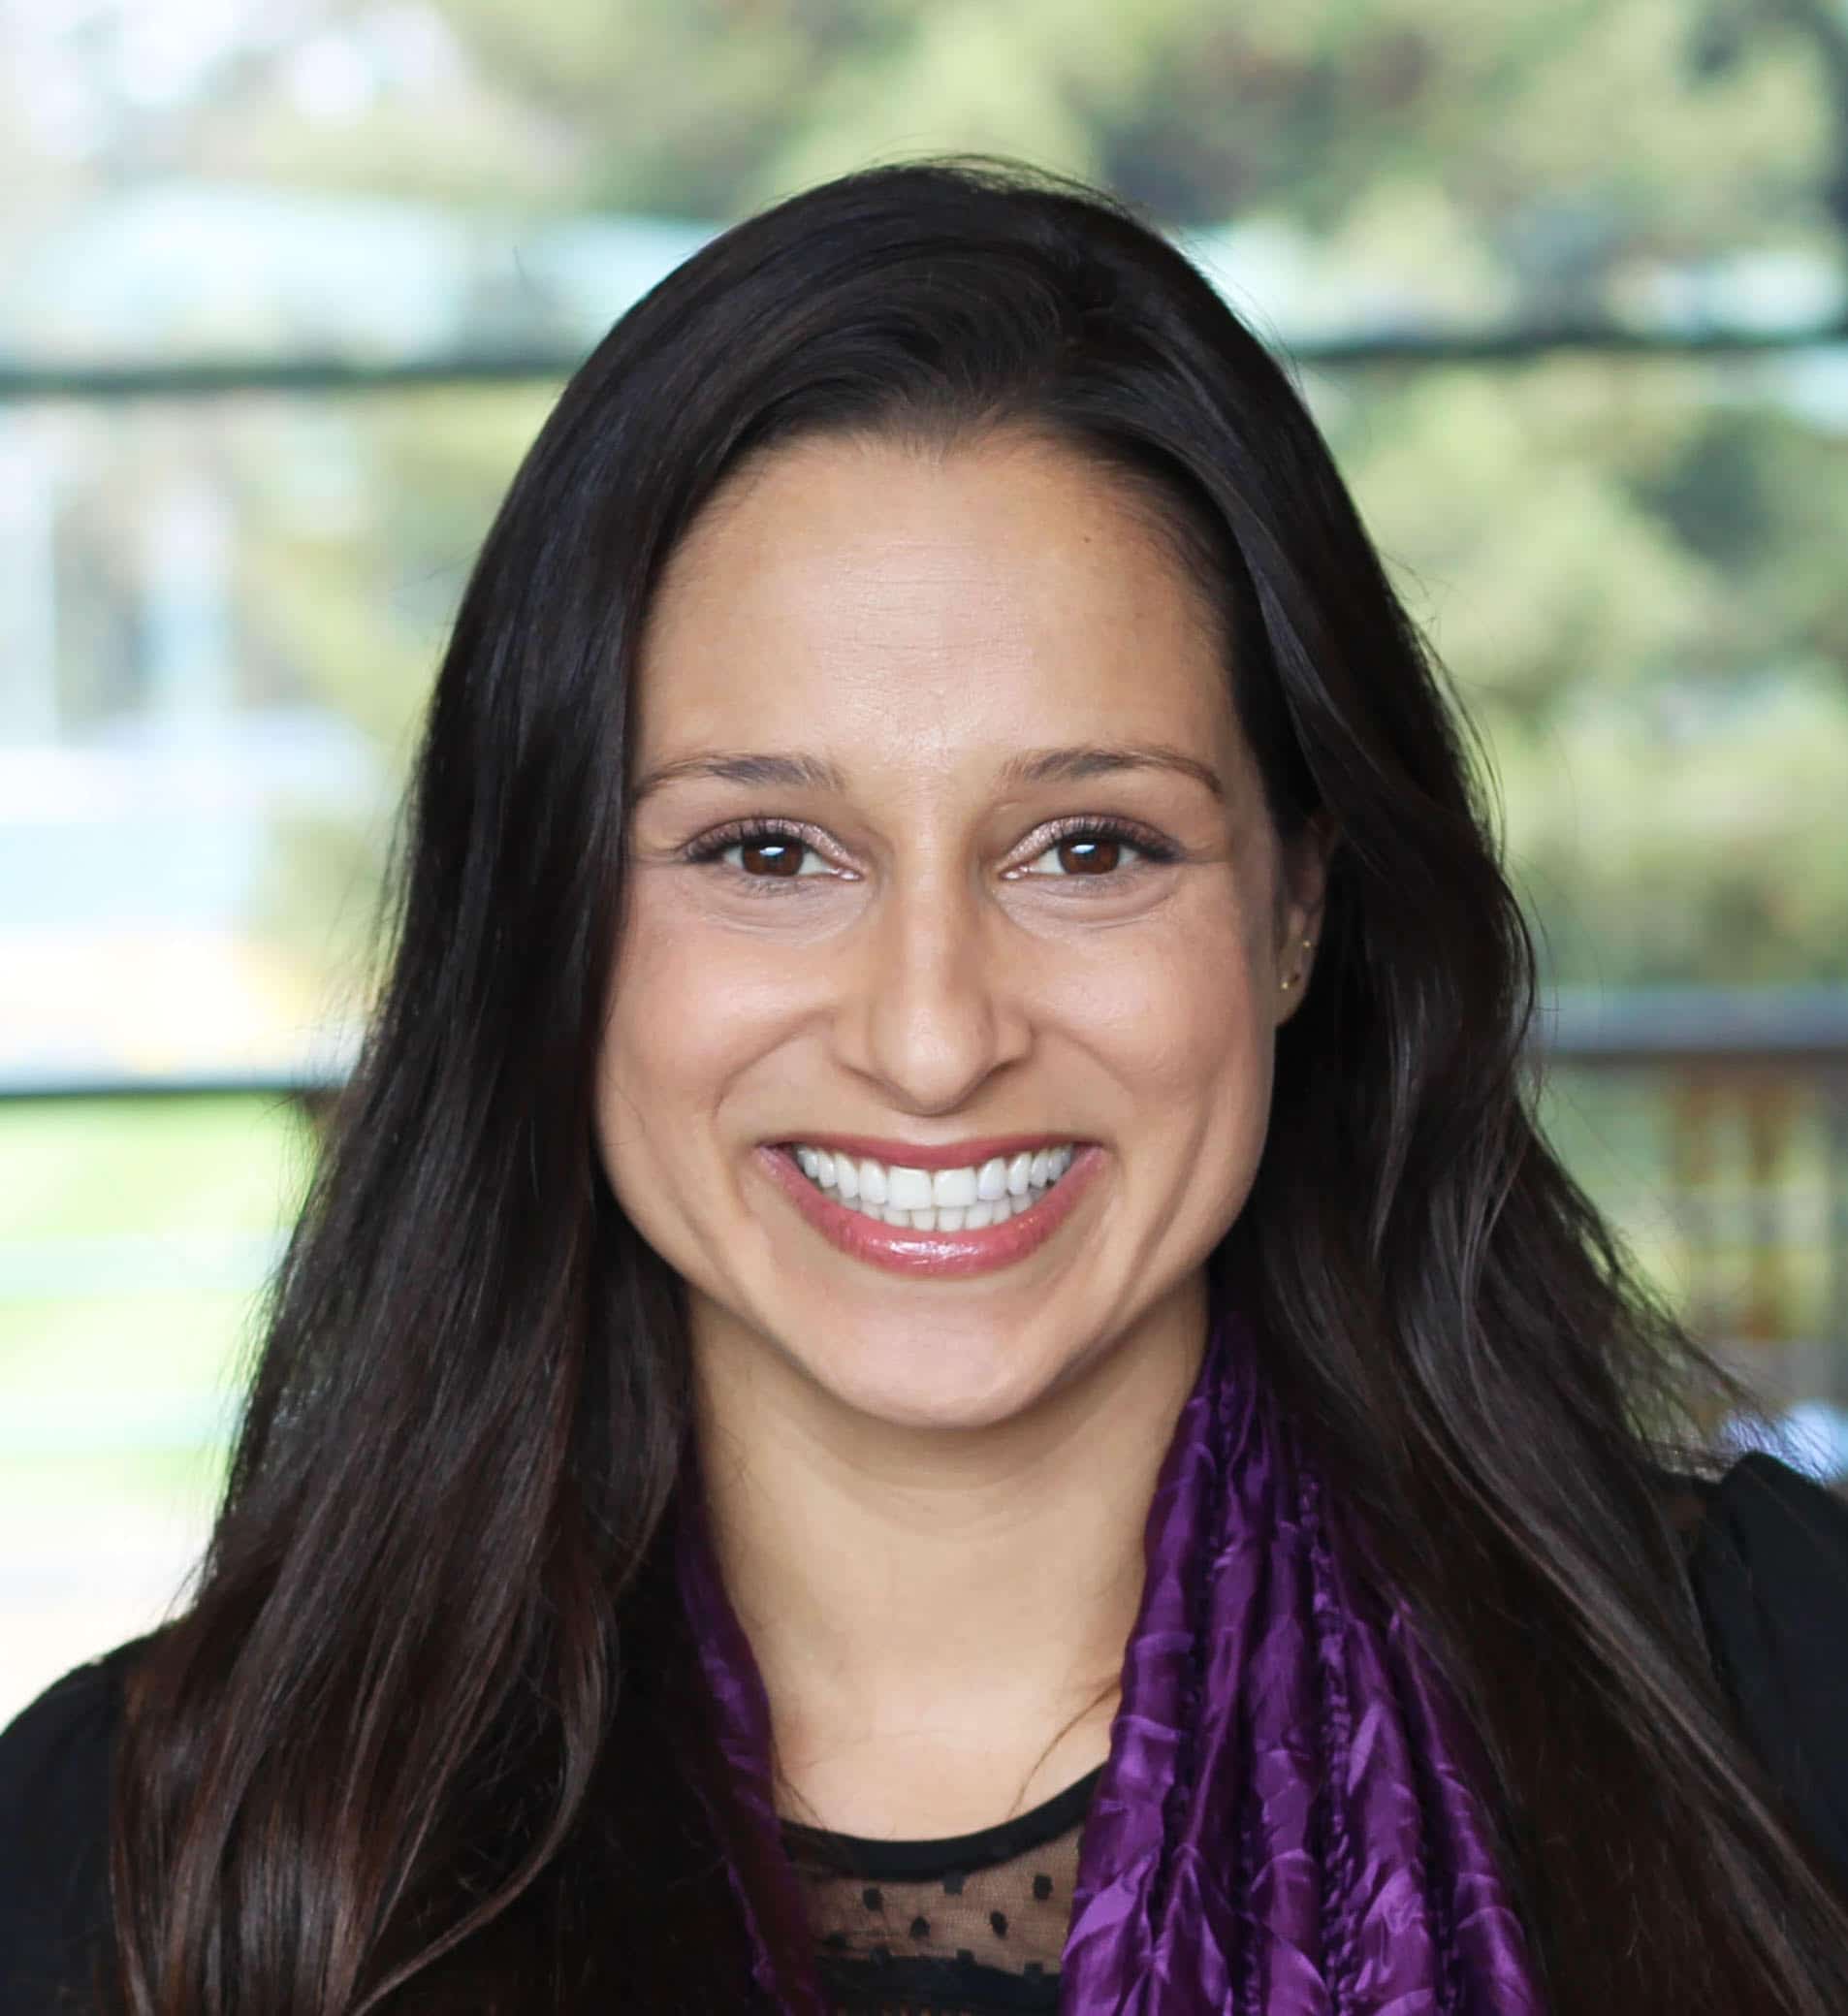 Headshot of San Francisco psychologist Dr. Sahar Dorani, an Iranian American woman with long dark hair and a purple scarf.